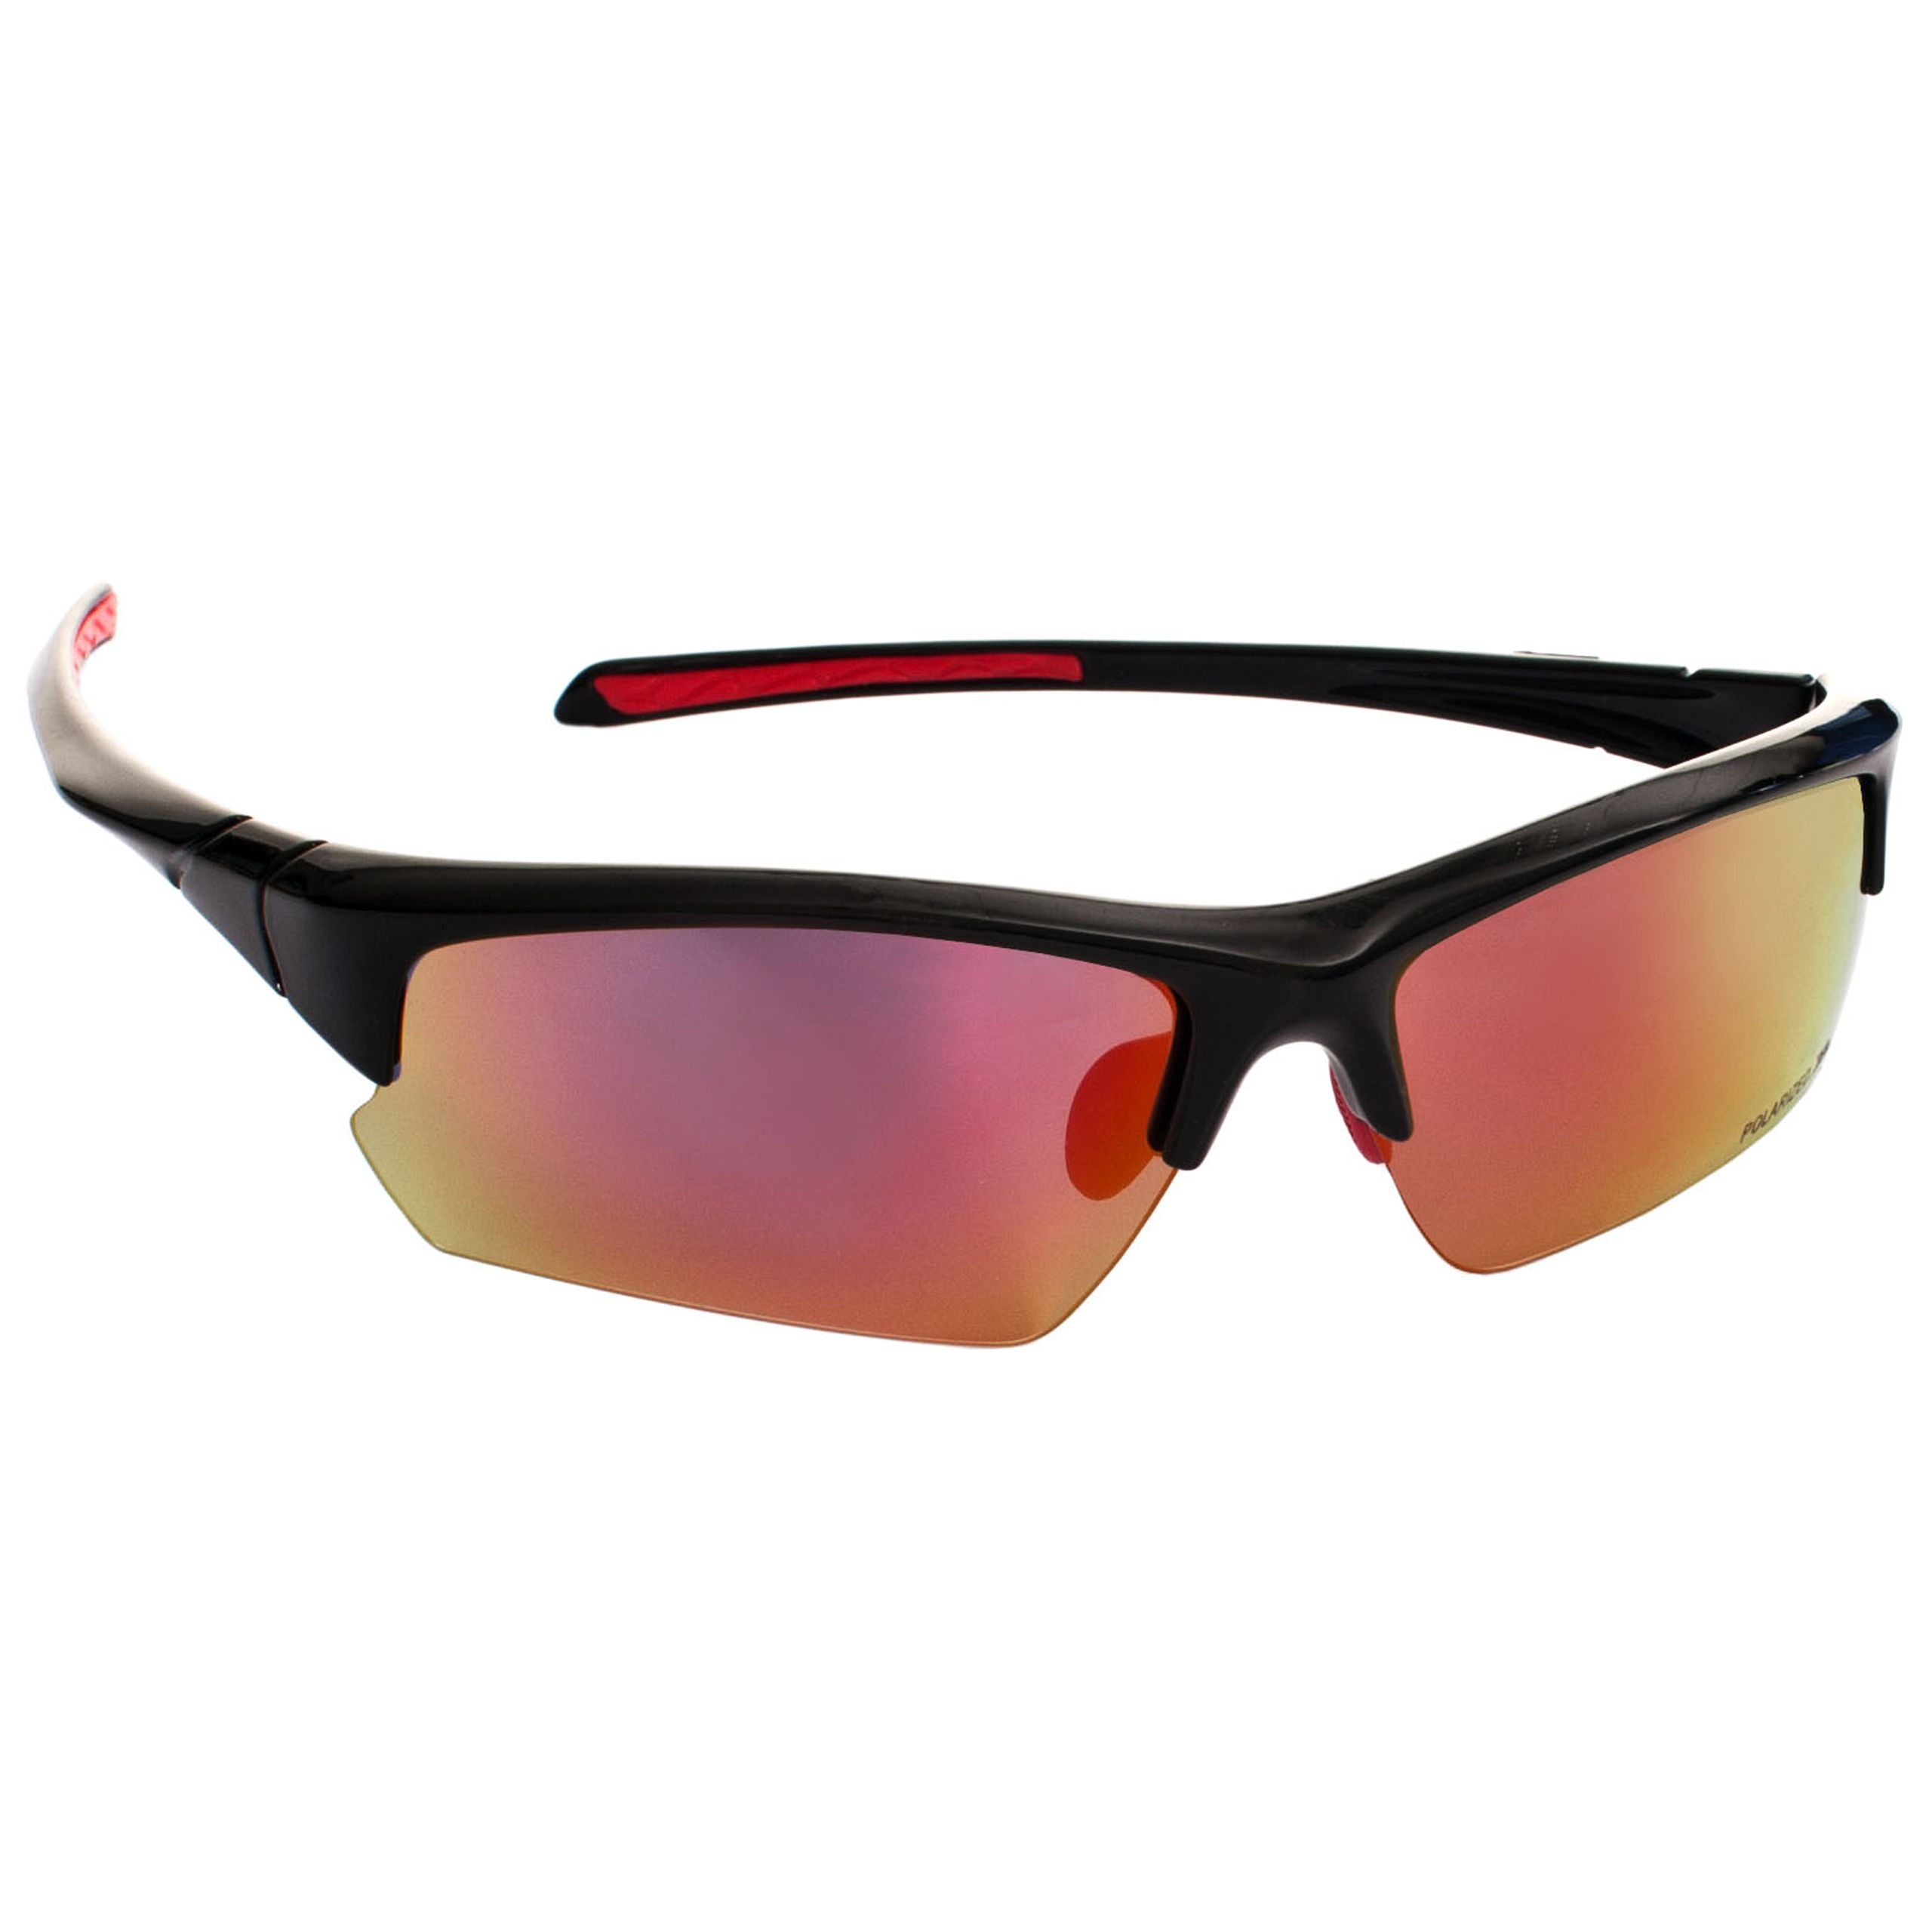 Falconpro Unisex Sunglasses